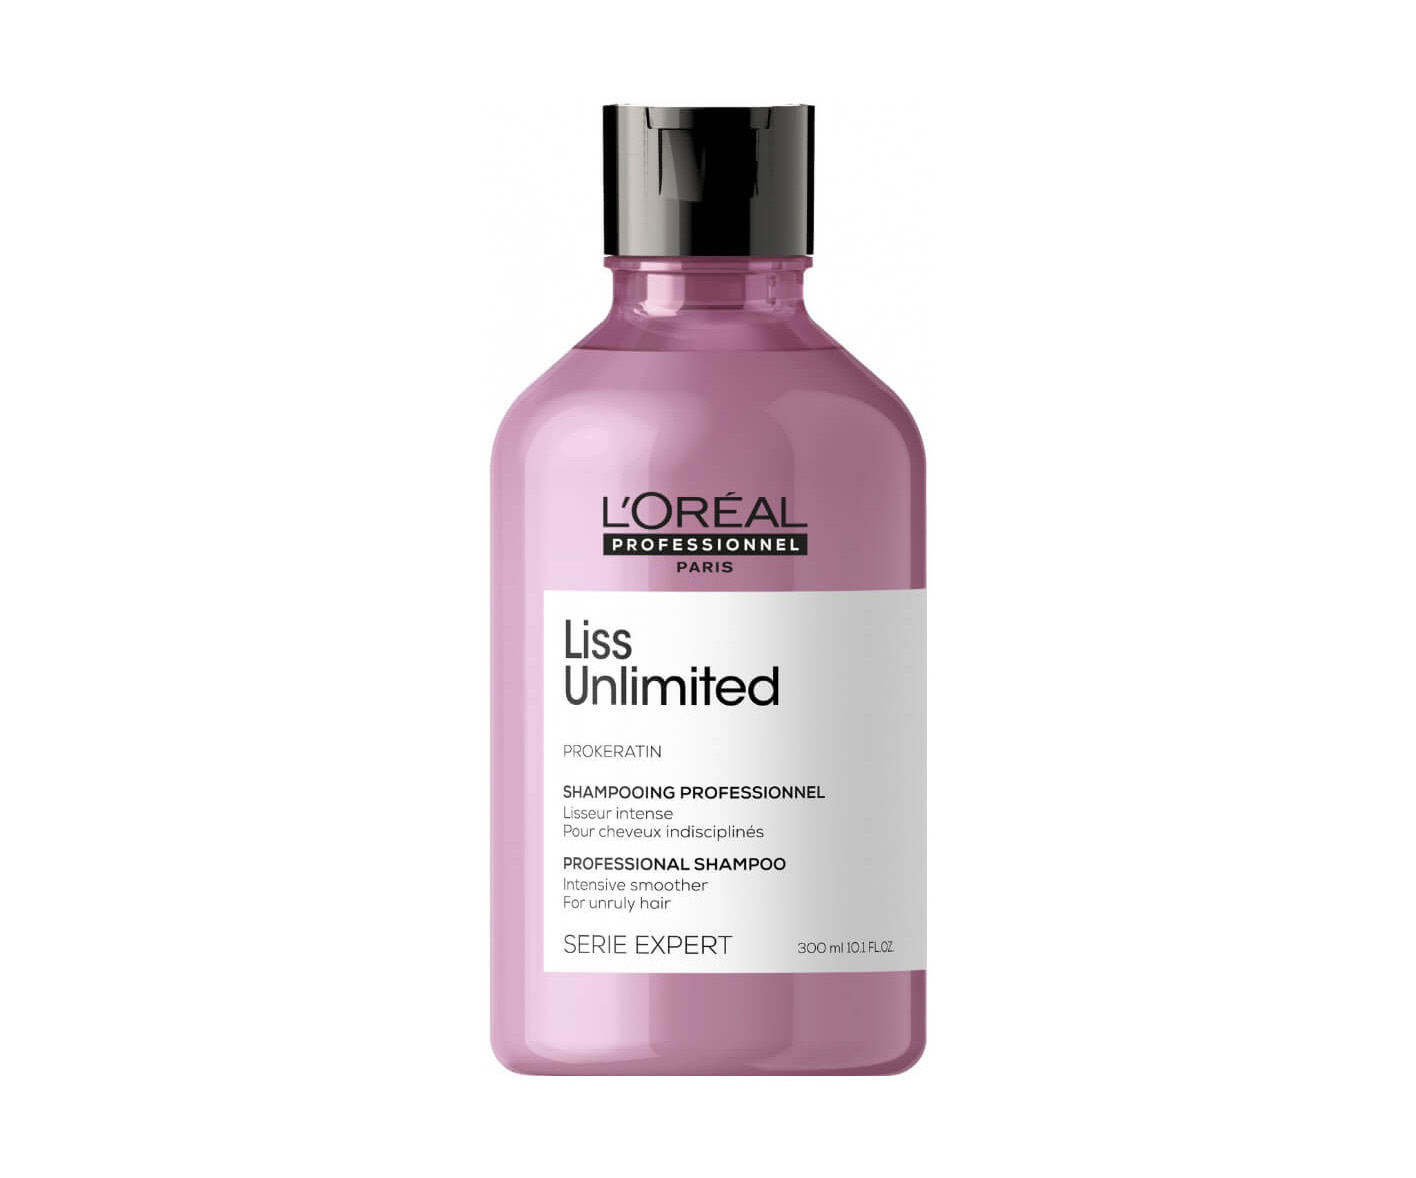 L'Oréal Professionnel Liss Unlimited, Shampoo für krauses Haar